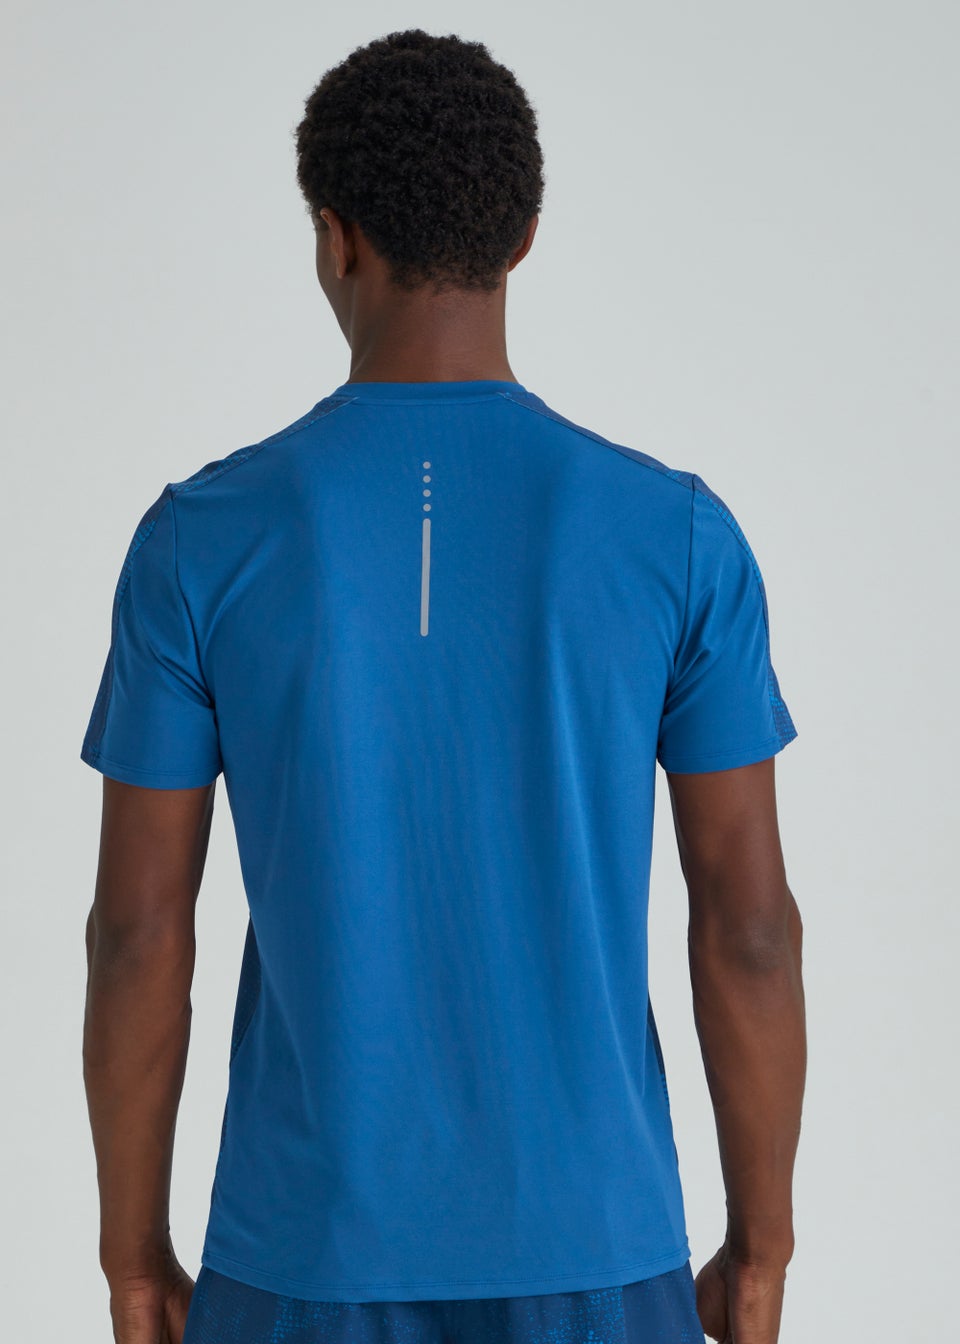 Souluxe Shirt Mens Medium Tee Athletic Gym Blue Short Sleeve Training N327